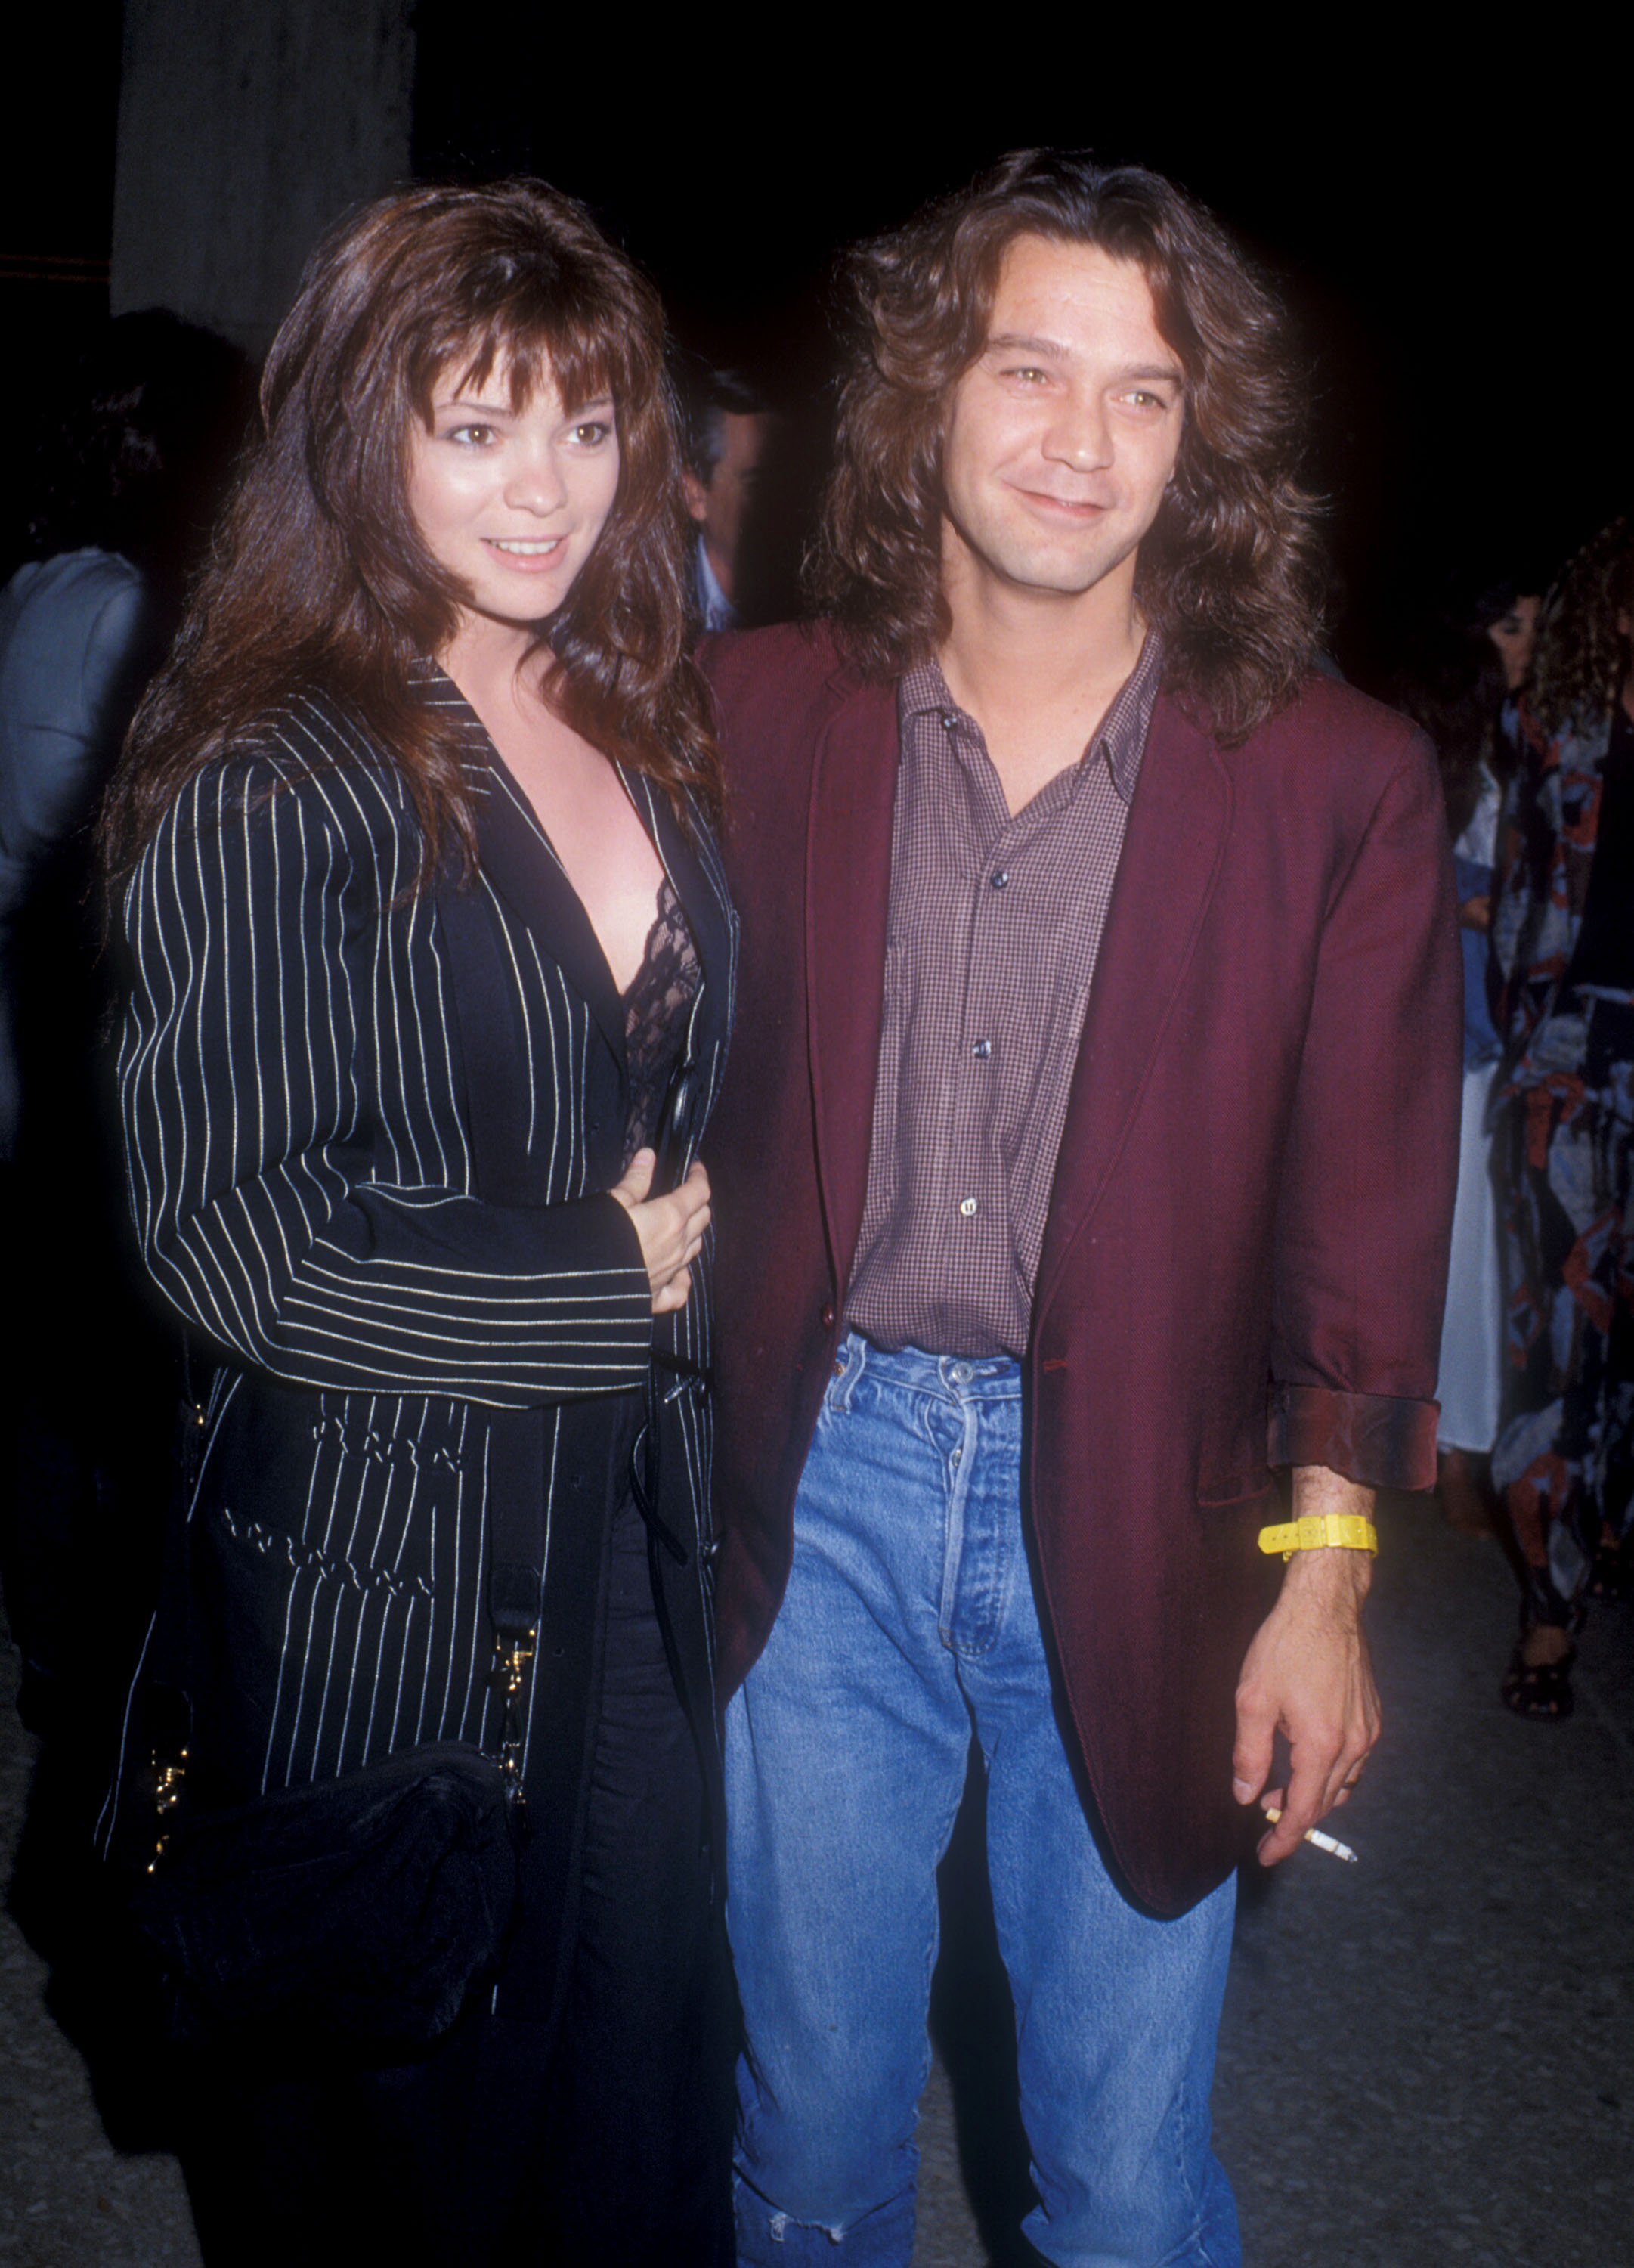 Valerie Bertinelli and Eddie Van Halen at the Los Angeles premiere of "Batman" on June 19, 1989 | Source: Getty Images